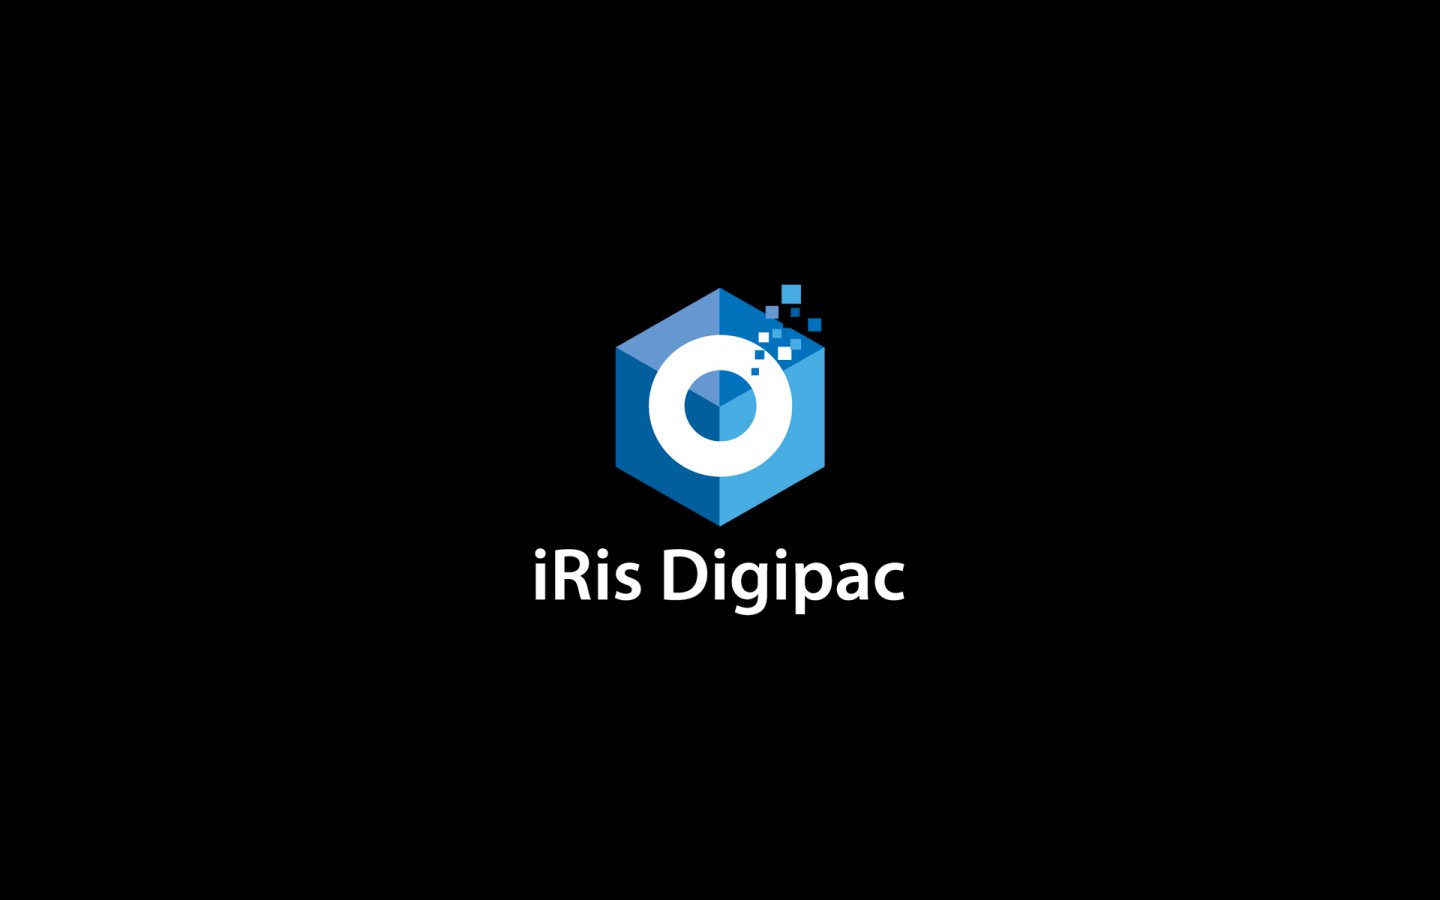 Iris Digipac Logo Design In Brand Colour